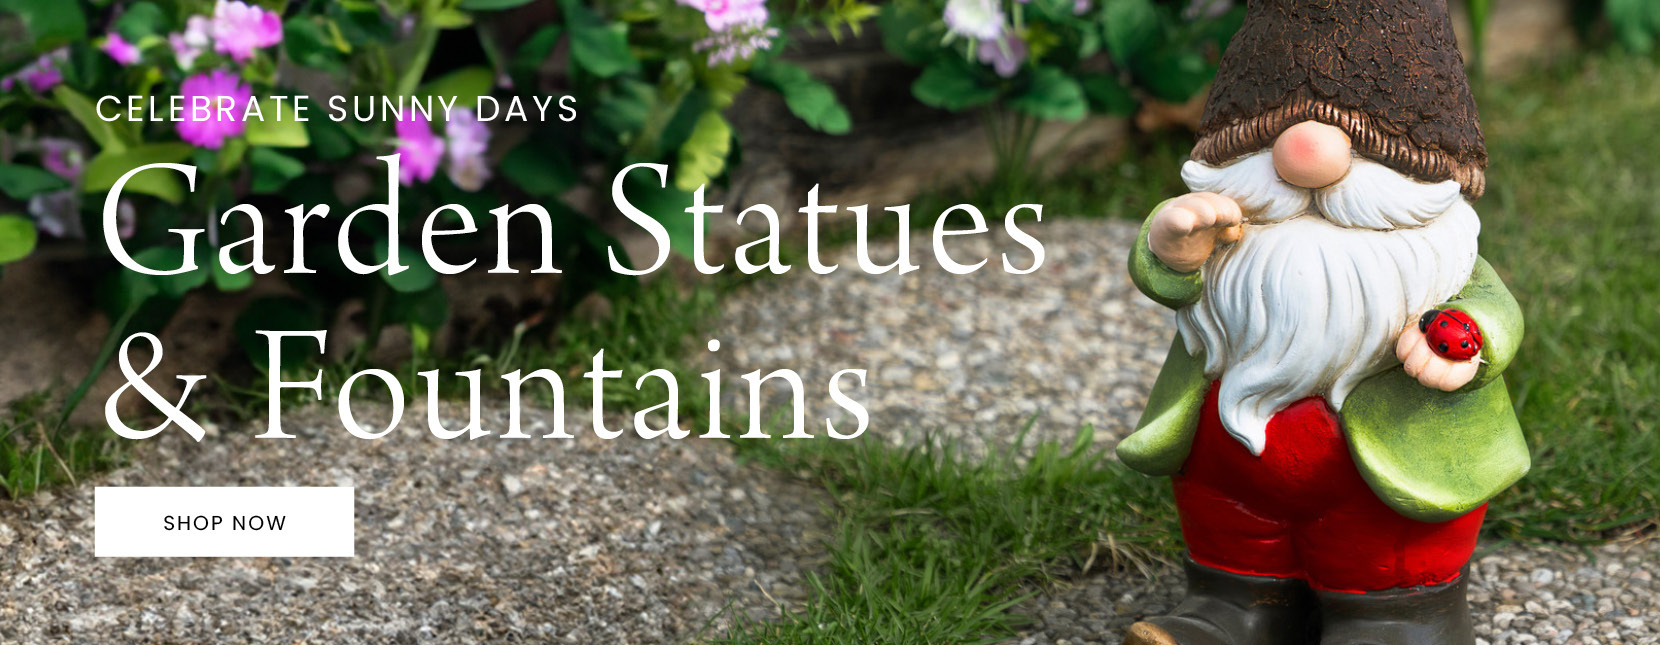 Garden Statues & Fountains